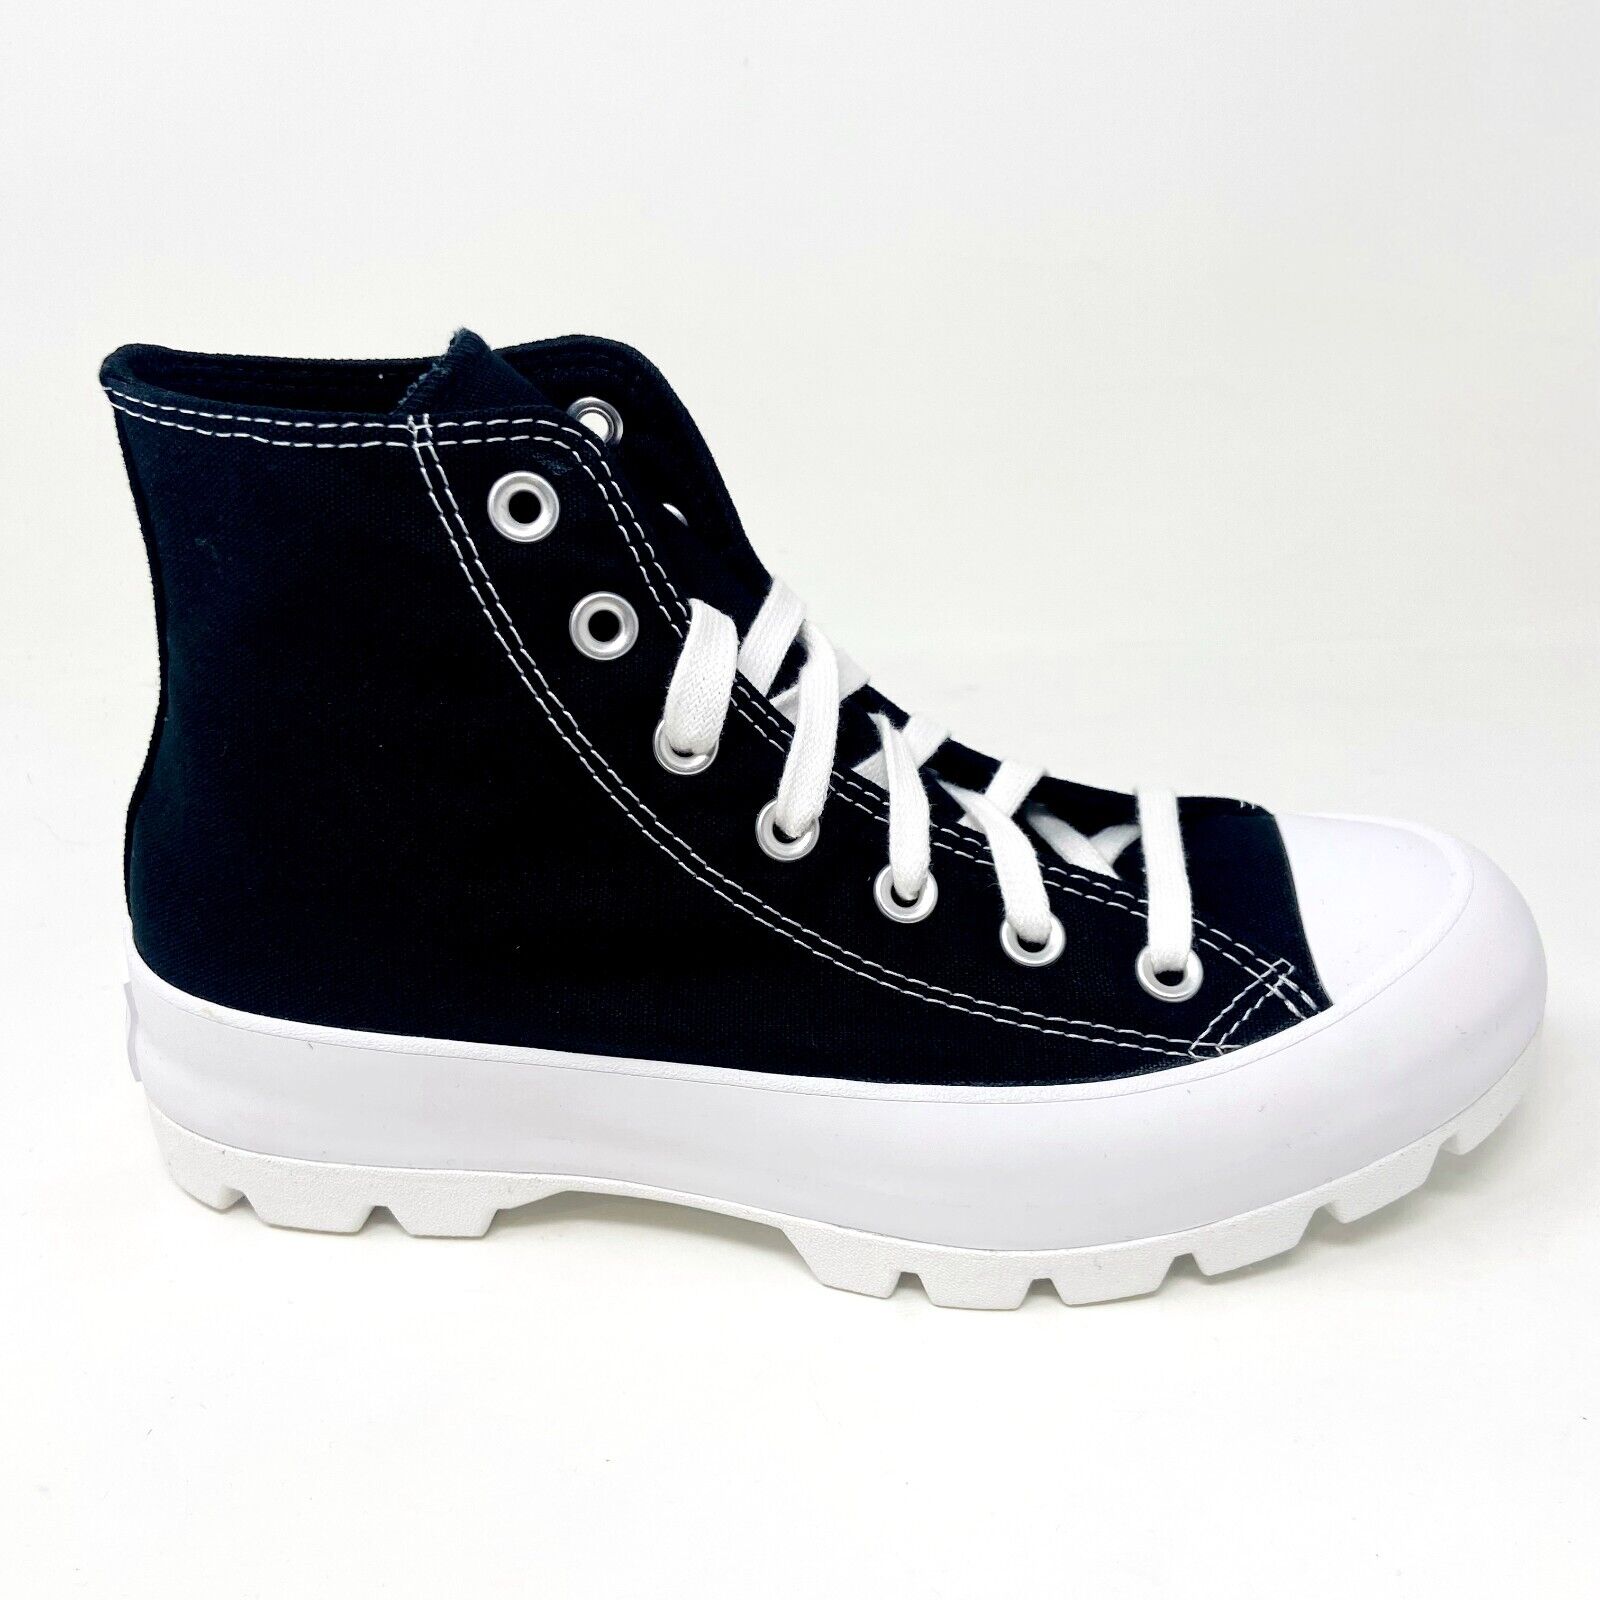 Converse CTAS Lugged High Top Black White Platform Womens Sneakers 565901C  | eBay